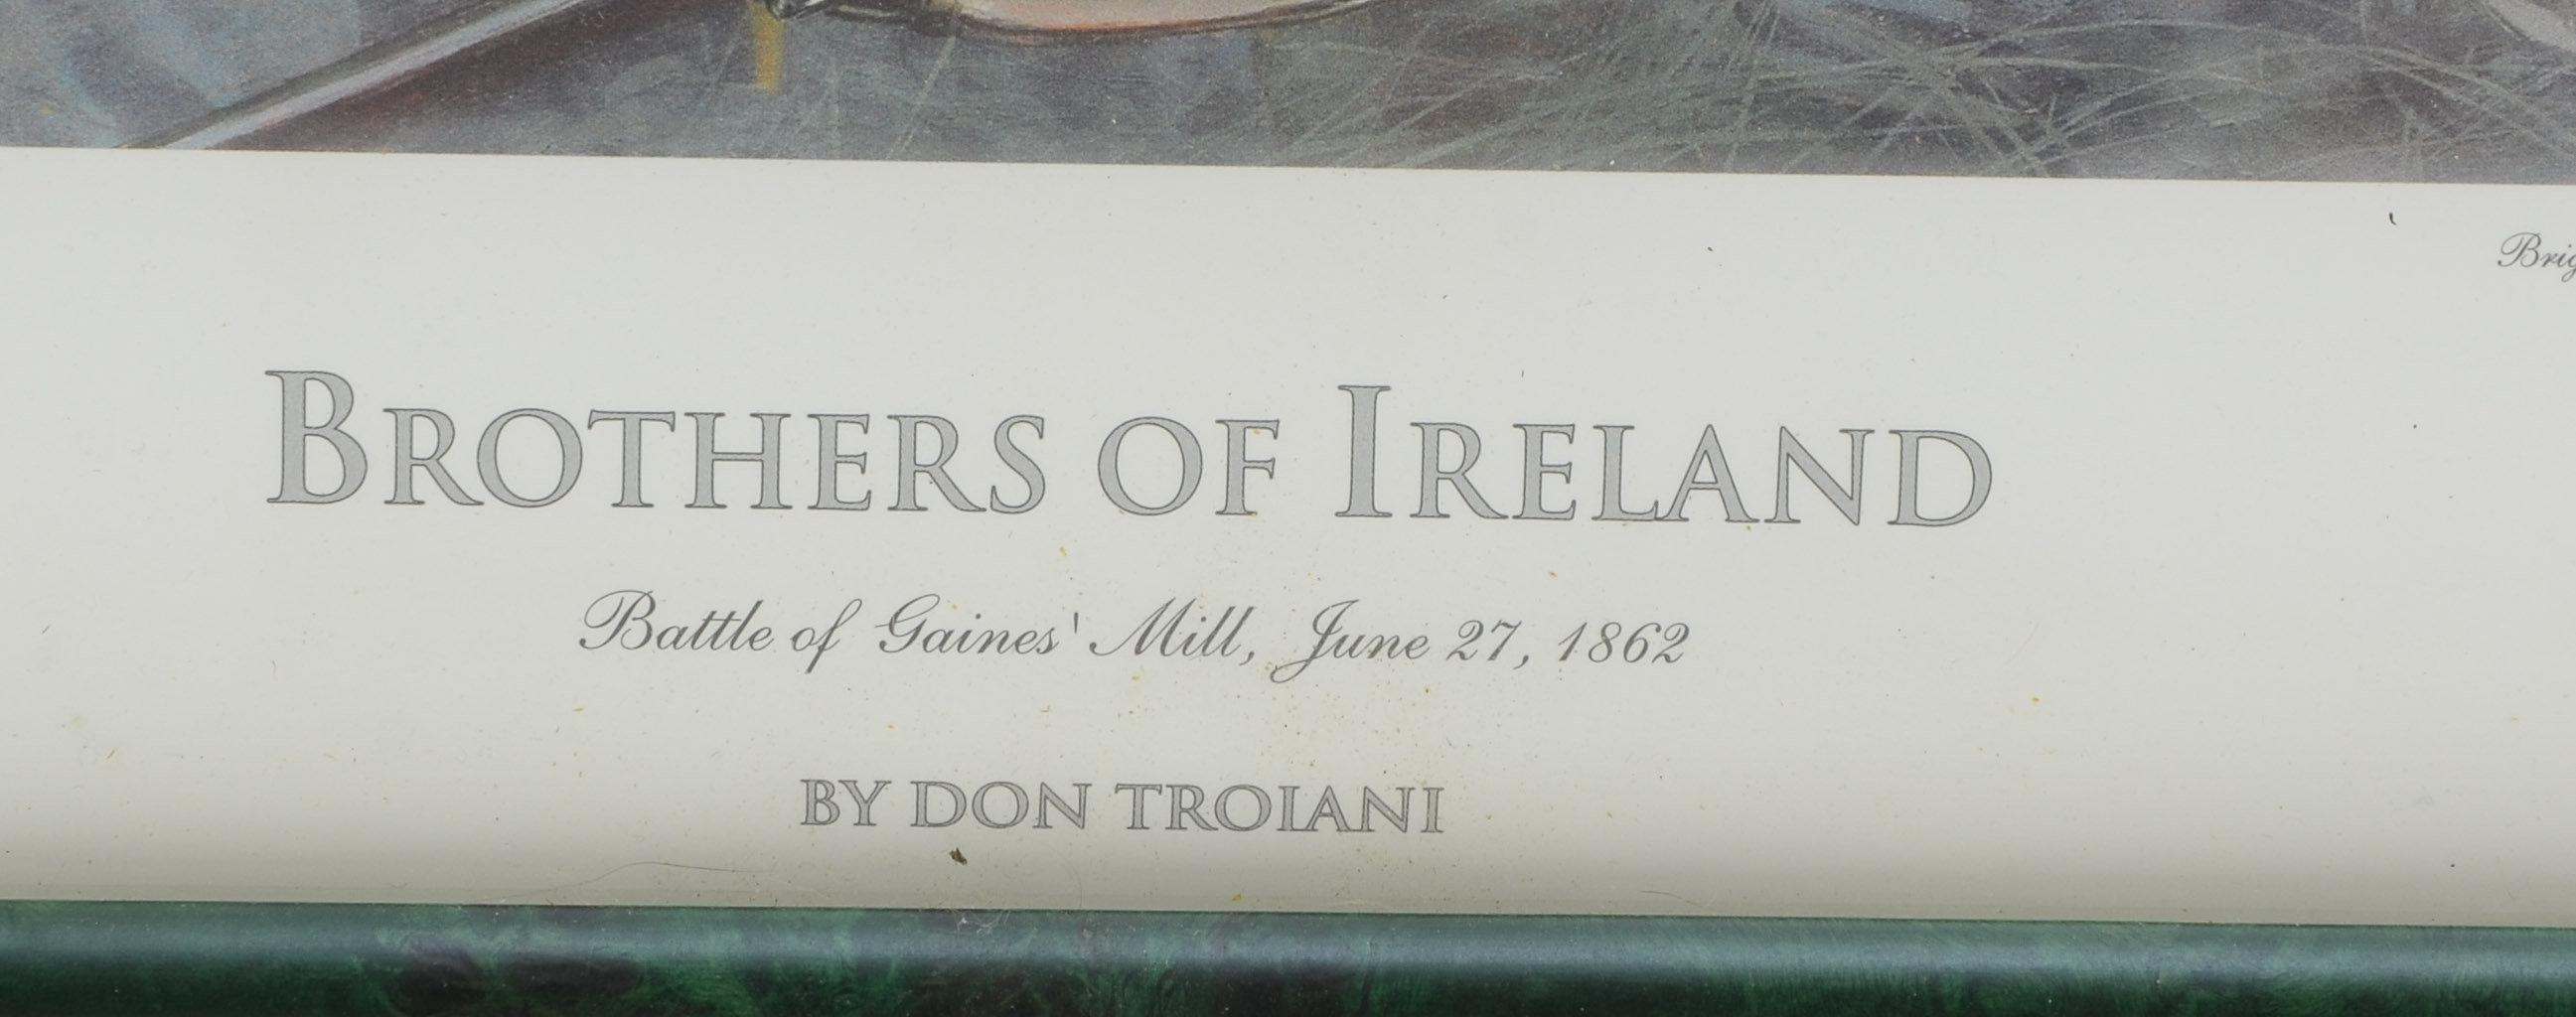 Don Troiani: Brothers of Ireland